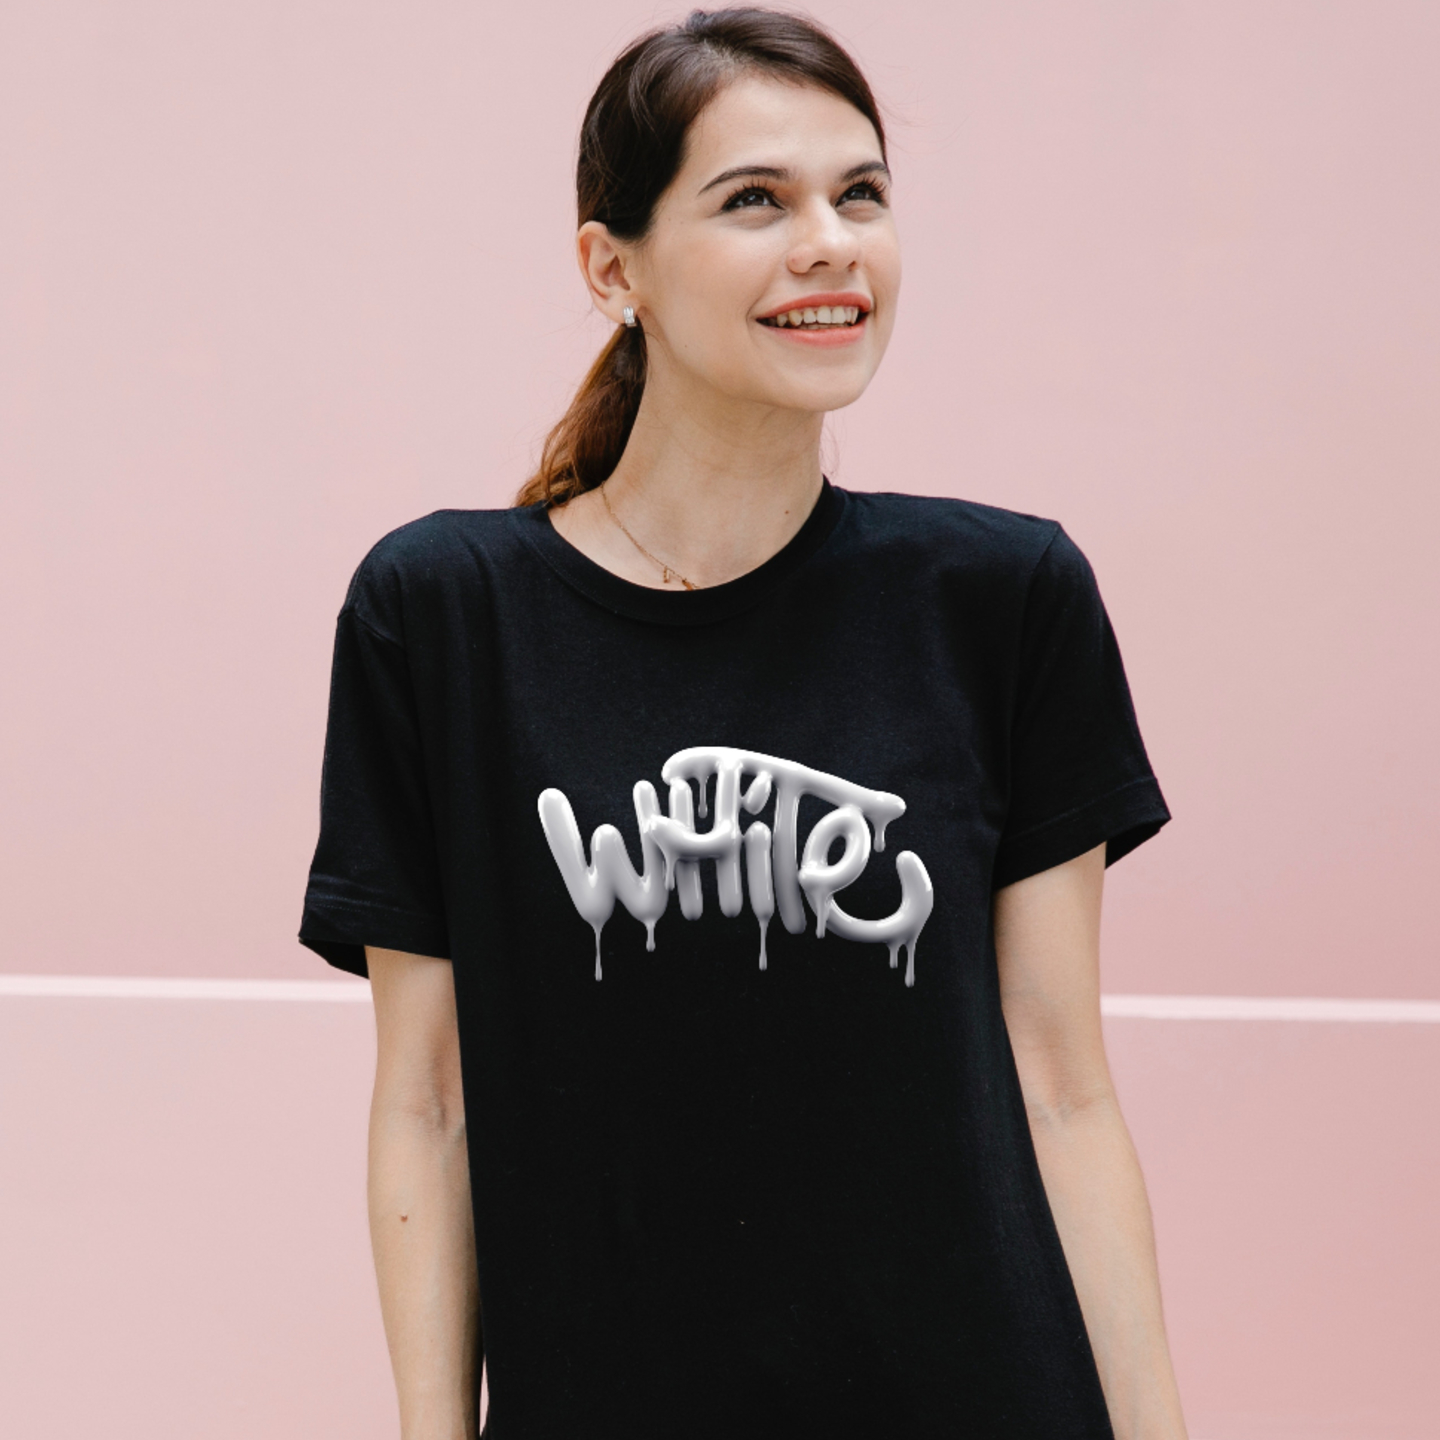 White Word Printed T-Shirt